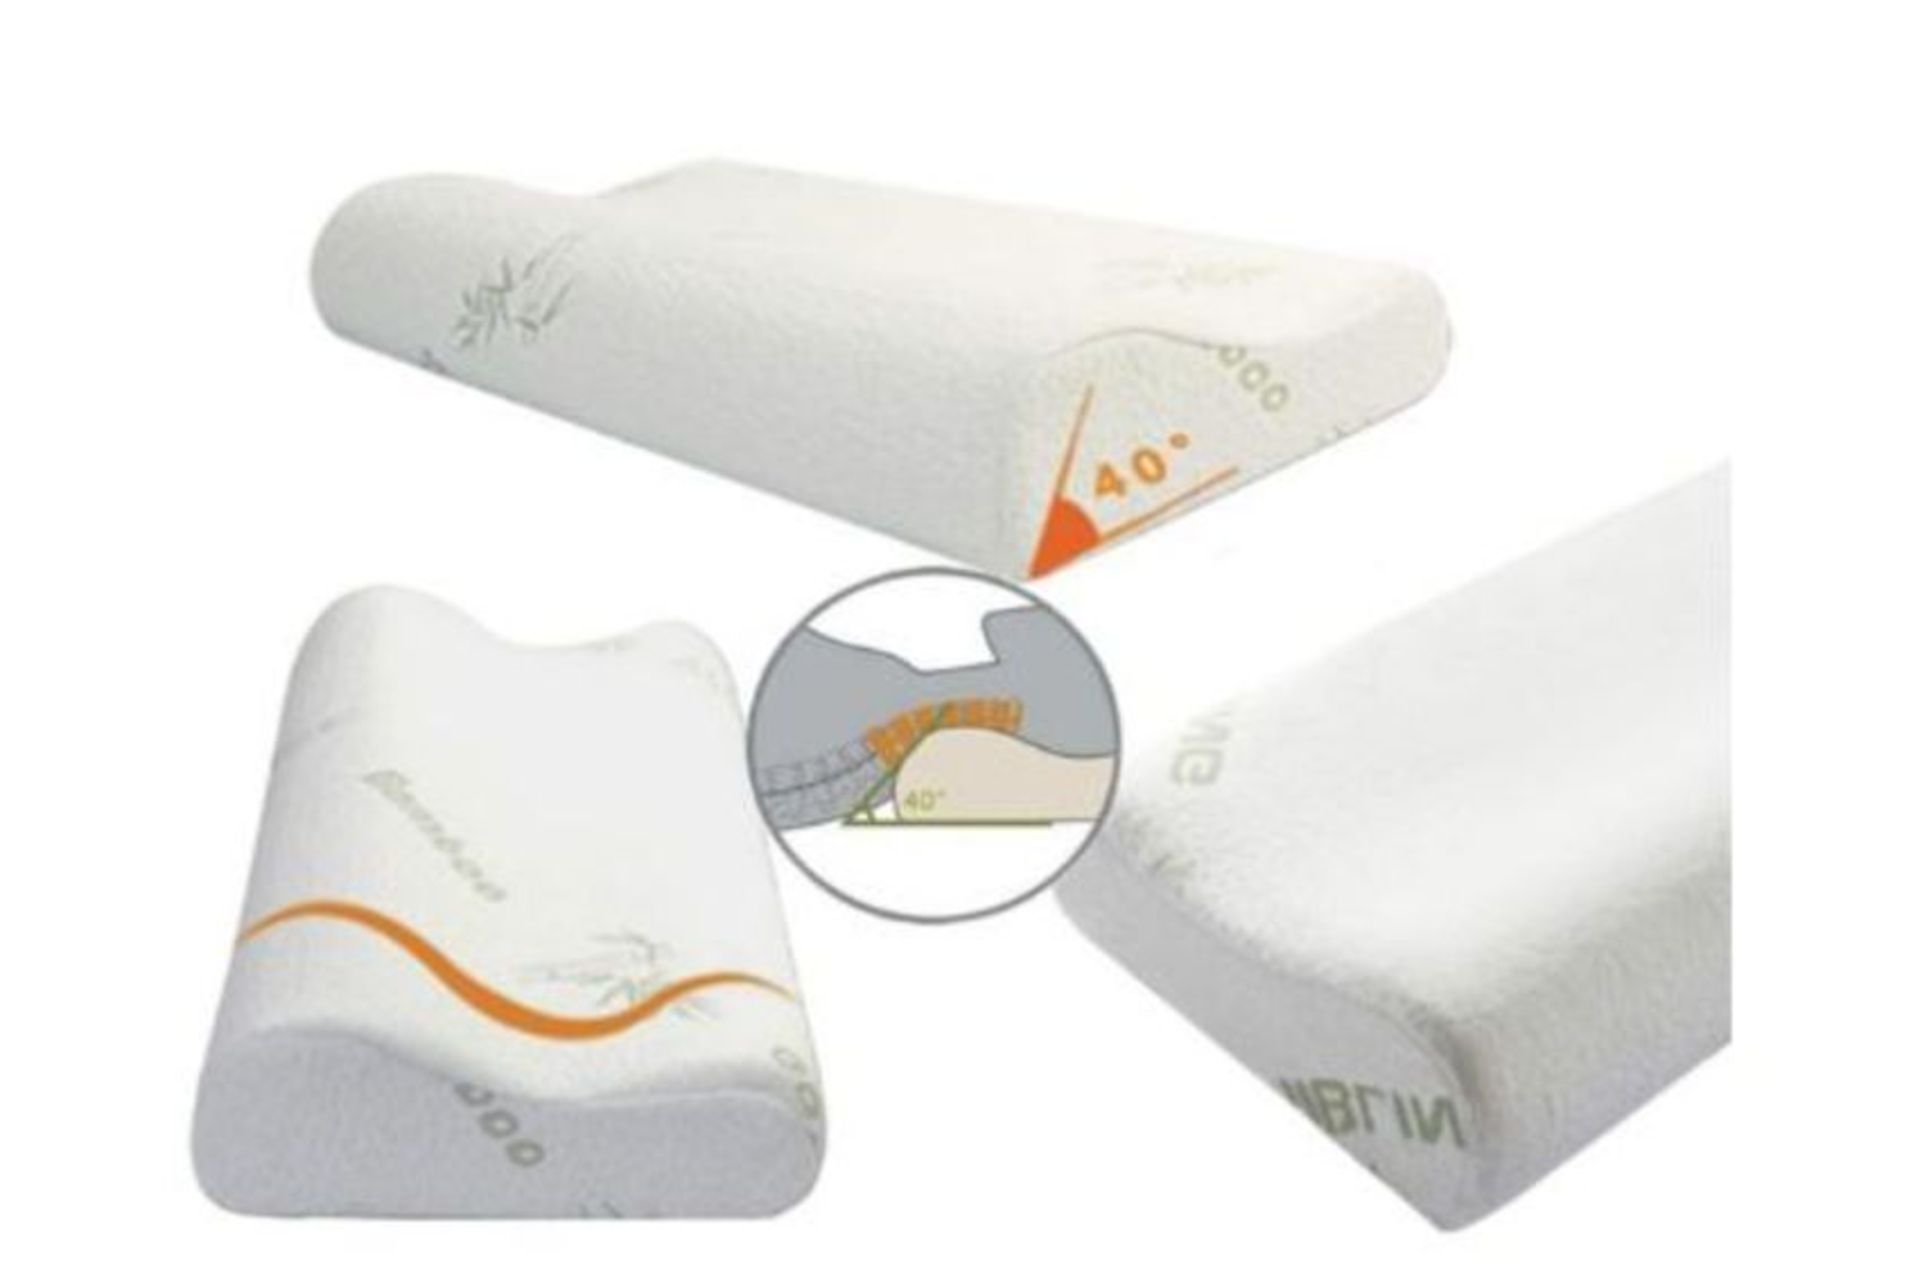 RRP £32.99 Ecosafeter Contour Memory Foam Pillow Cervical Orthopaedic Neck Pillow